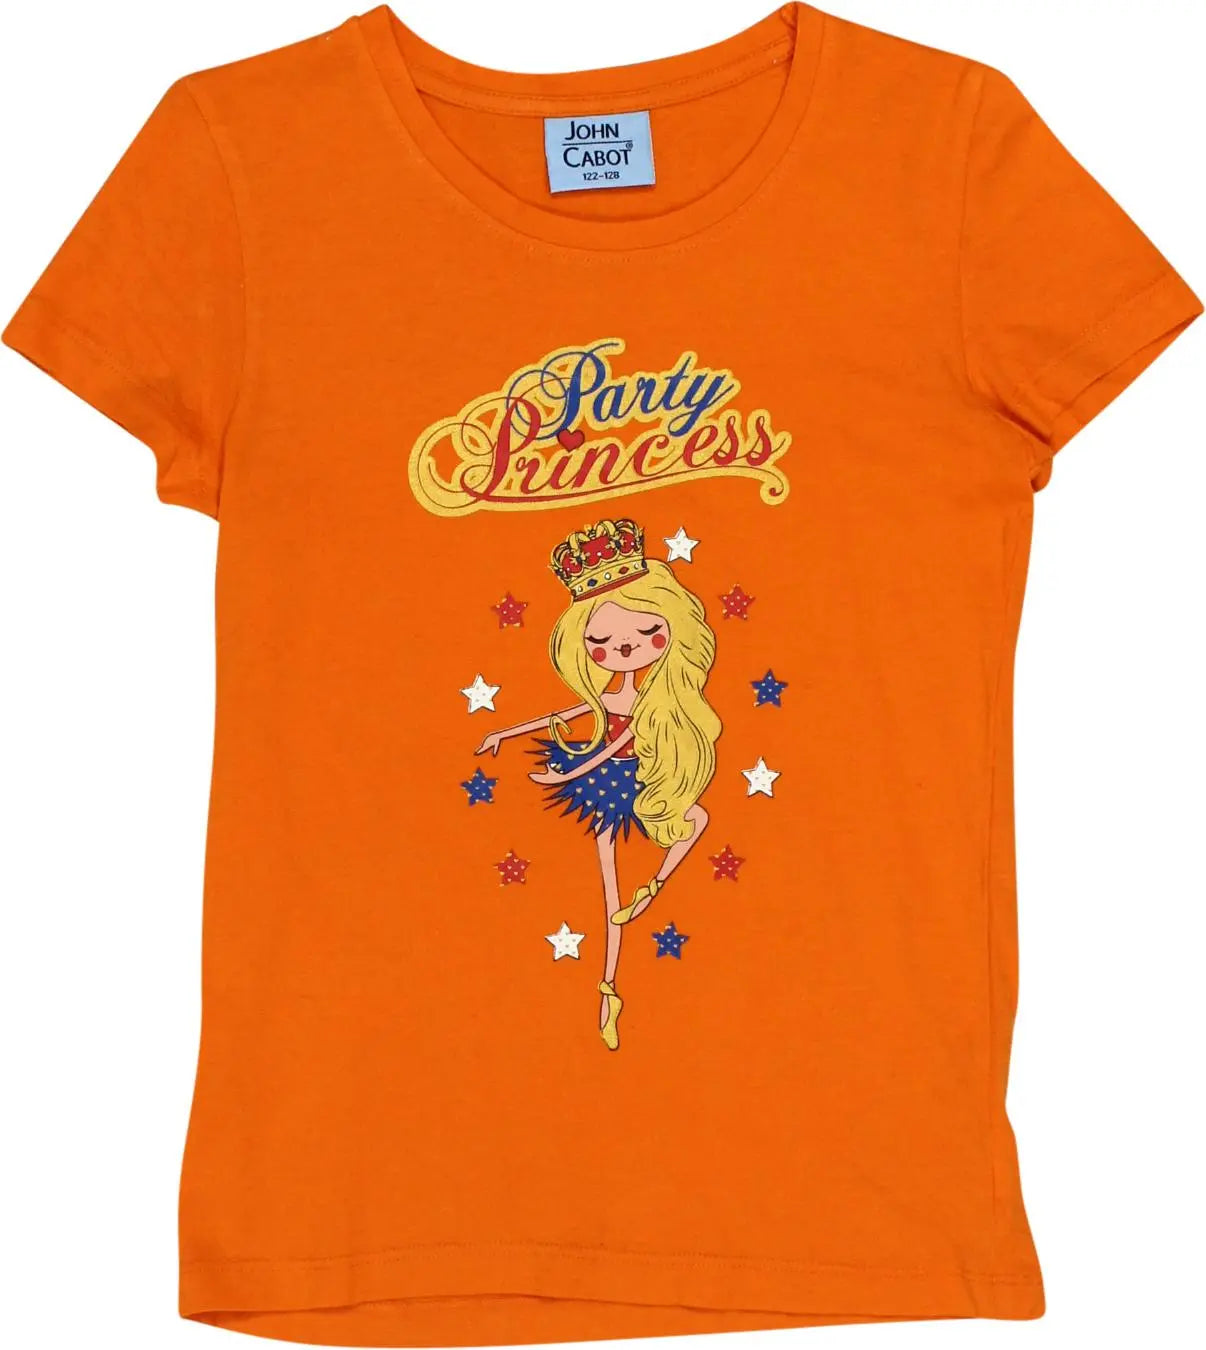 John Cabot - Orange T-shirt- ThriftTale.com - Vintage and second handclothing